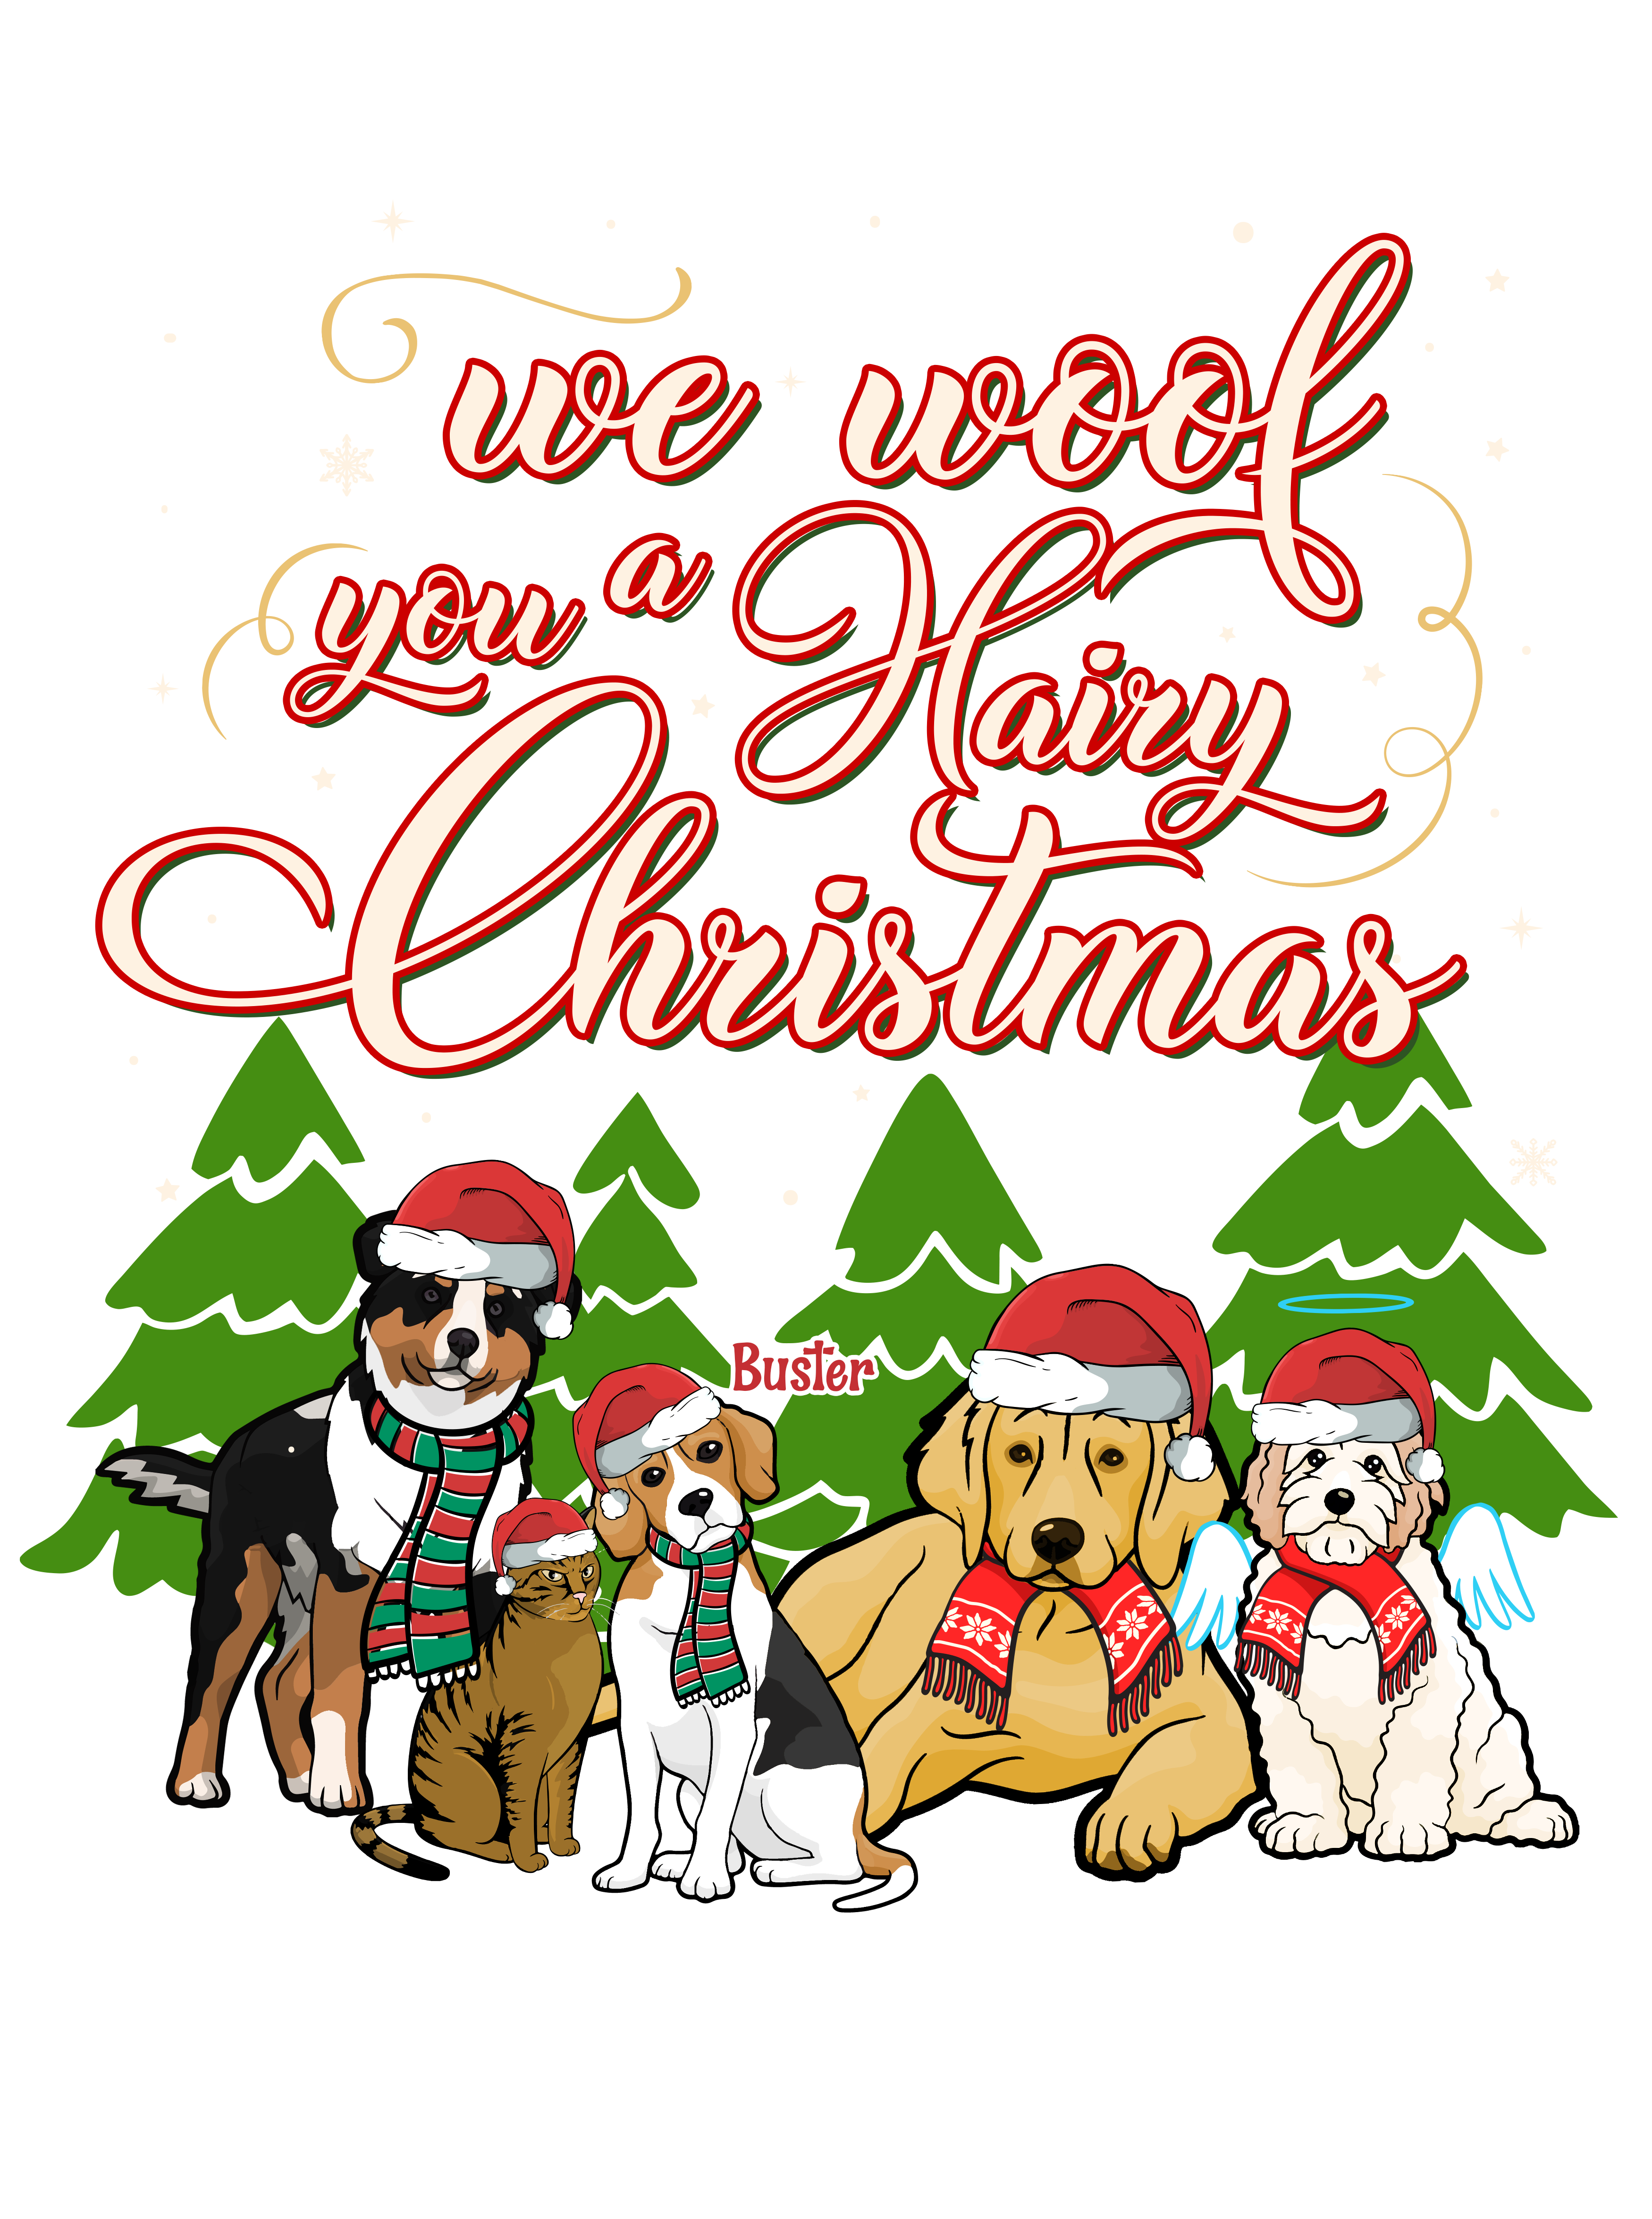 Christmas Themed Sweatshirt For Pet Lovers